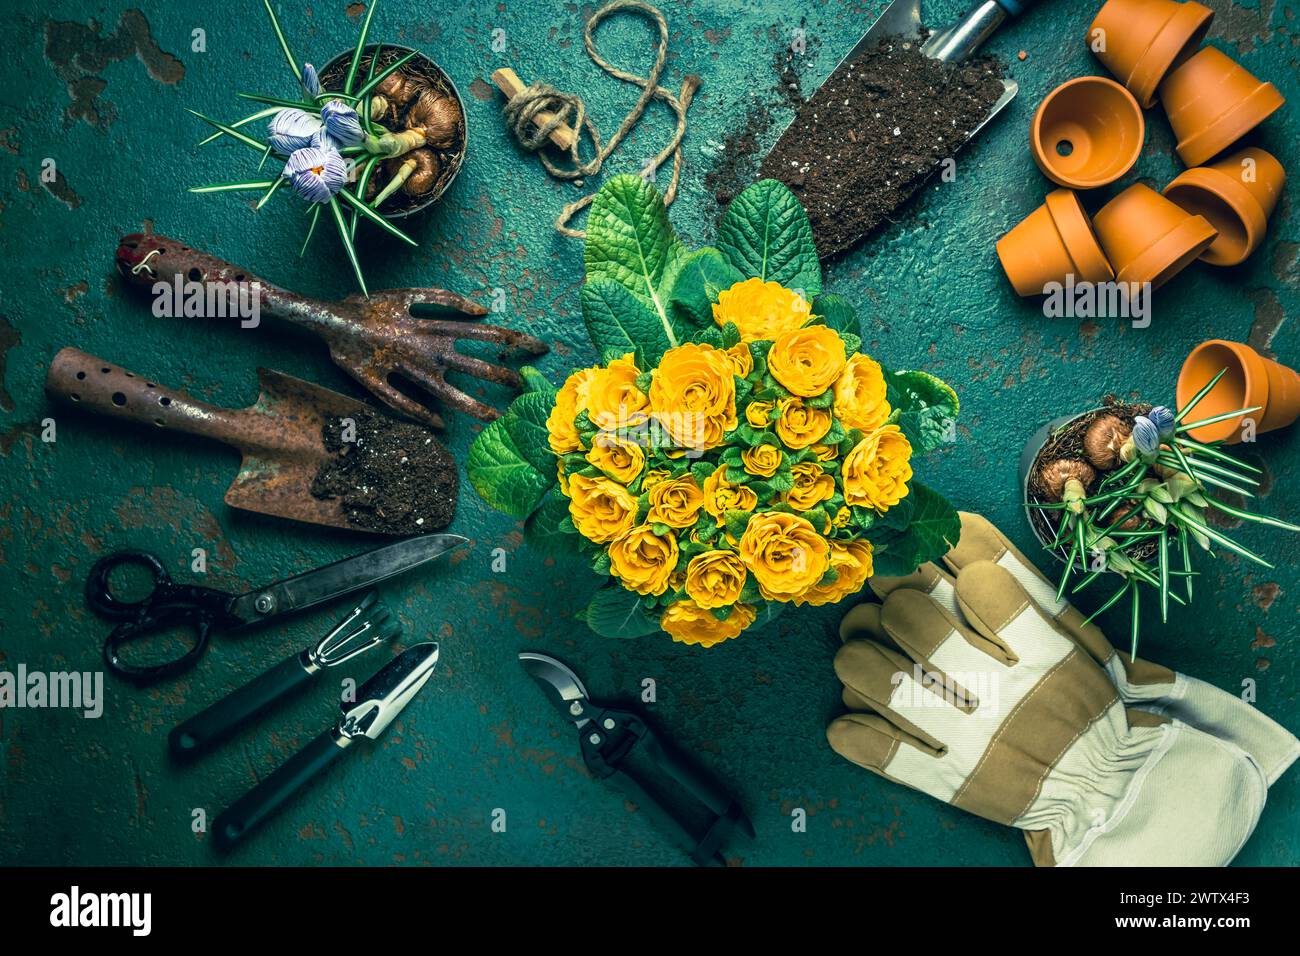 Gardening tools, pruning, horticulture and vegetable garden. Gardening concept. Stock Photo